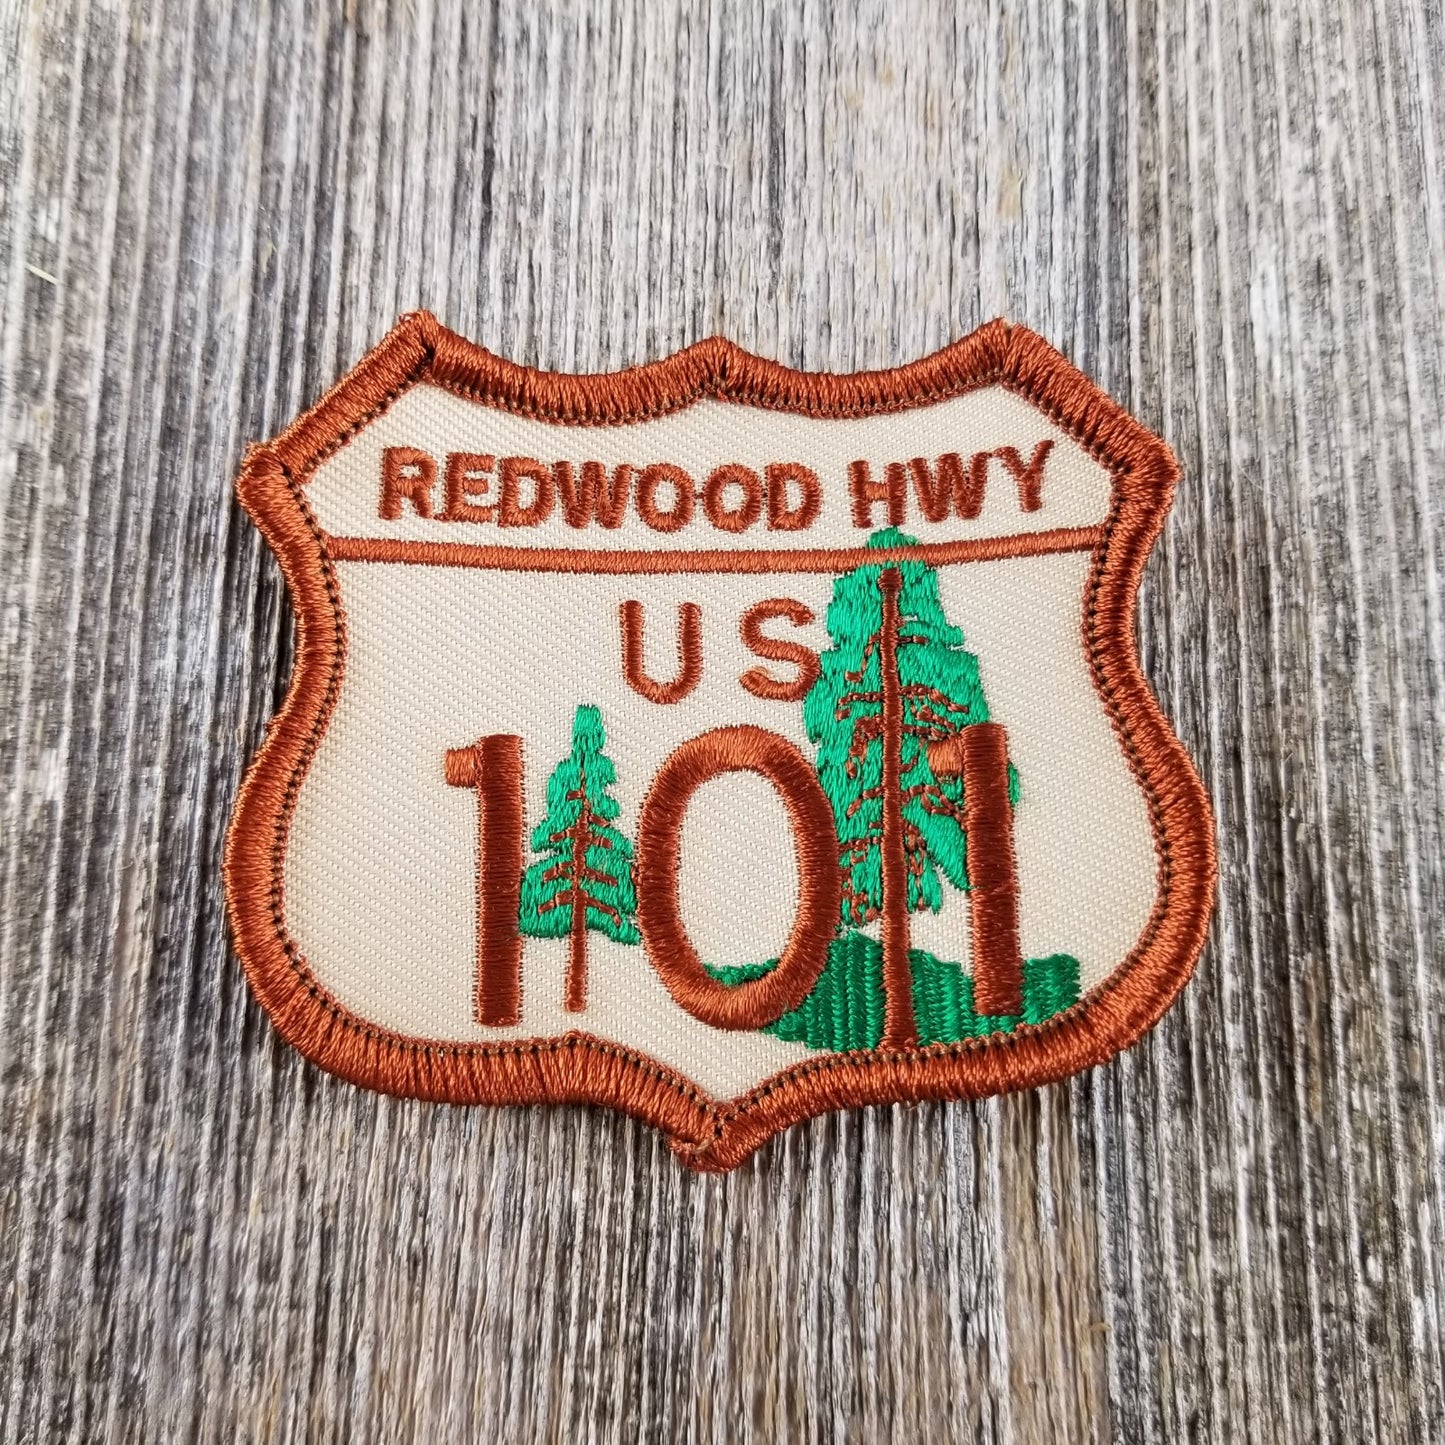 Redwood Hwy US 101 Sign Patch - Iron On California Souvenir Badge Emblem